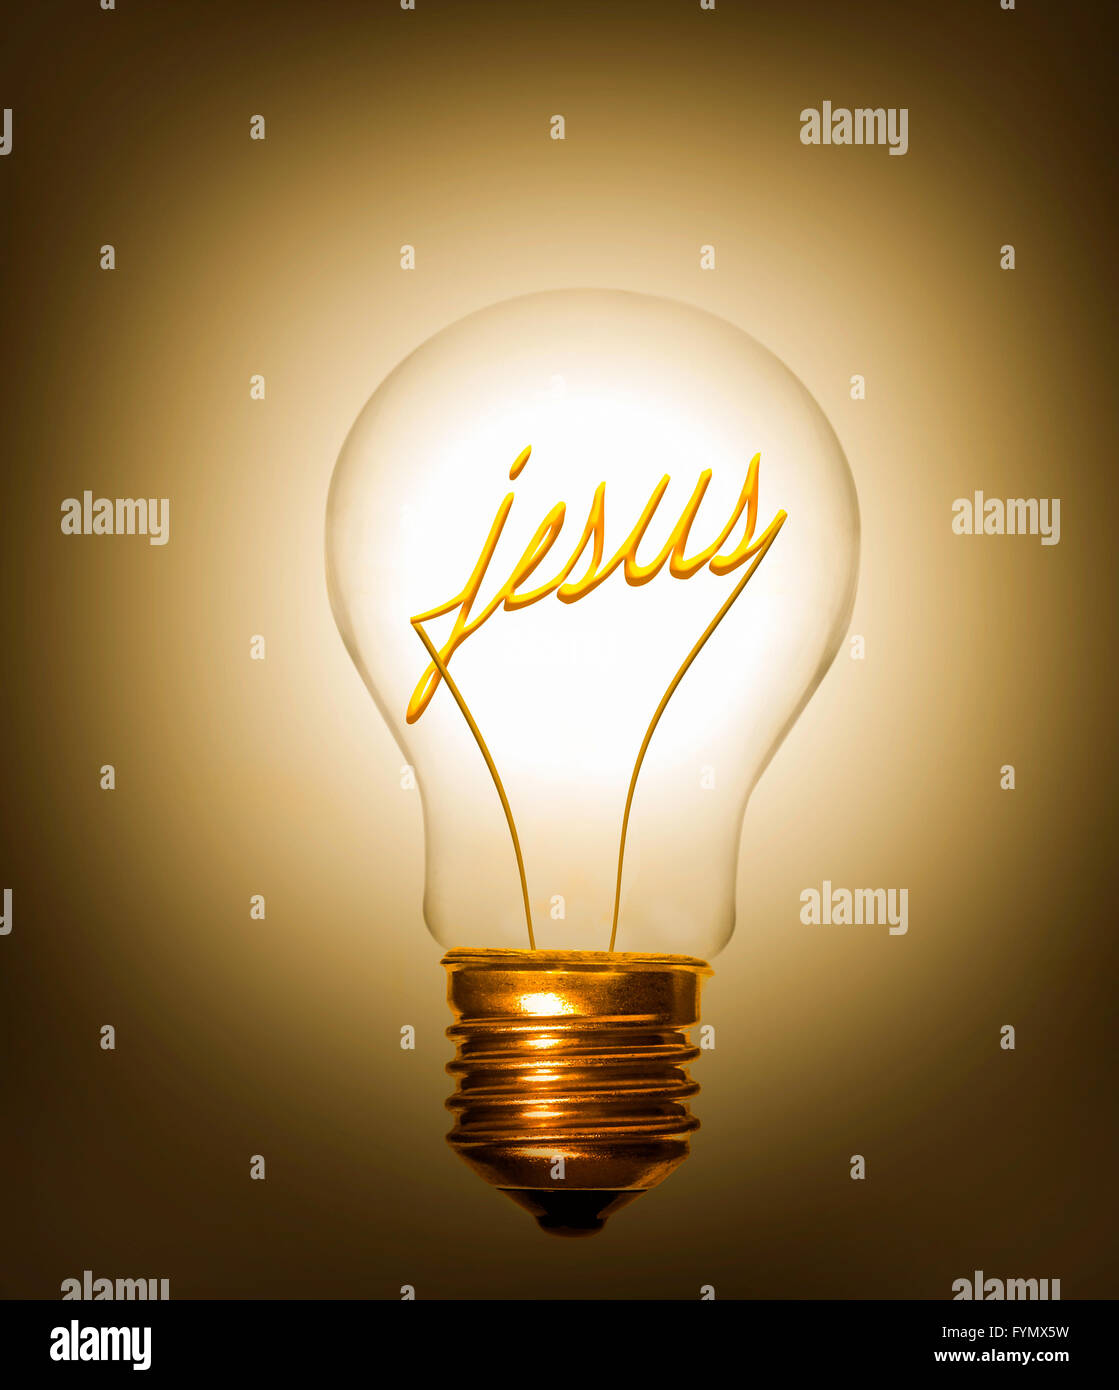 the idea of jesus providing light as a lightbulb Stock Photo